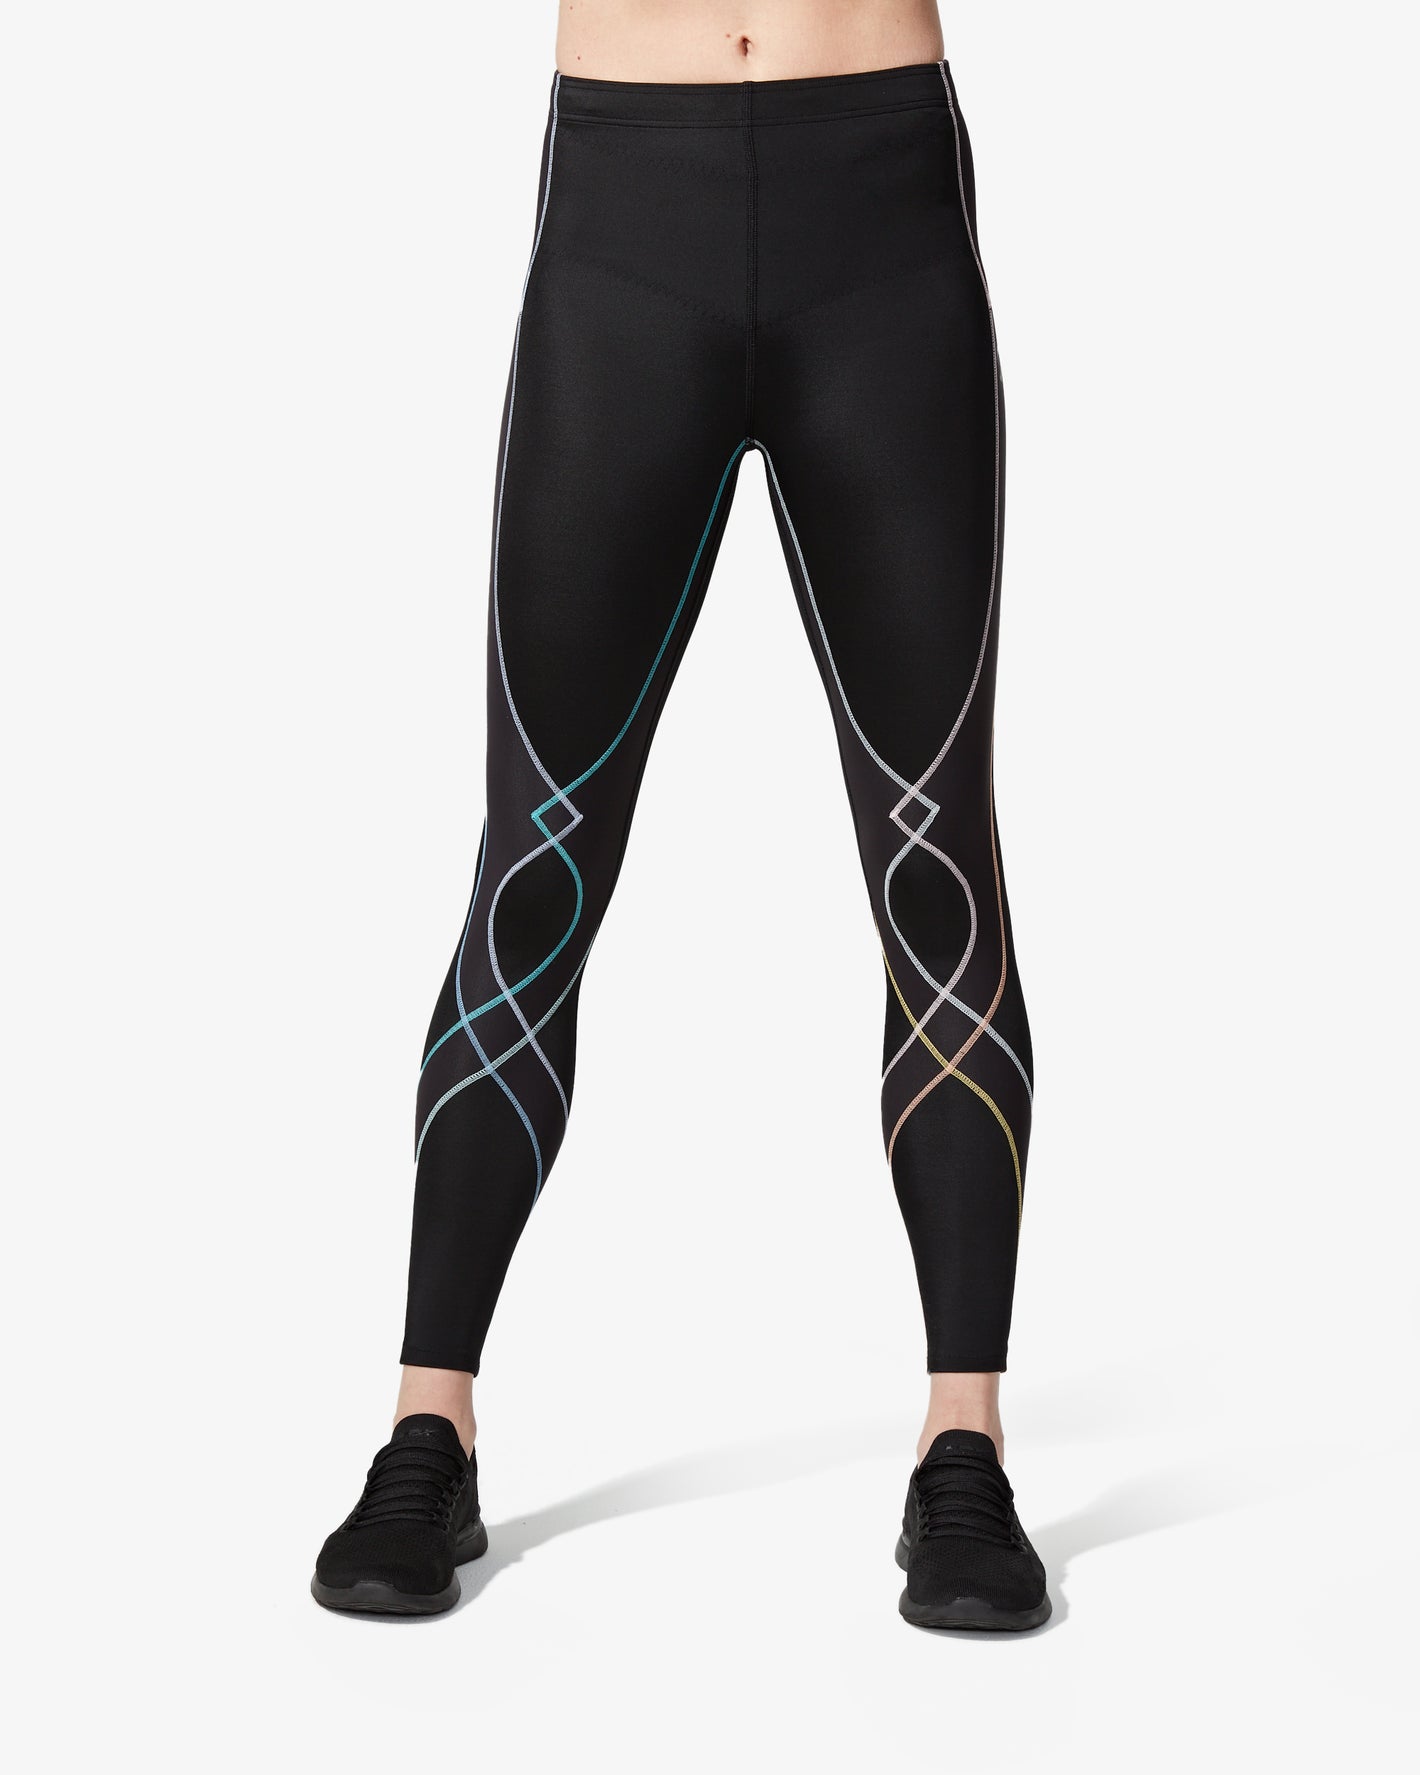 Nike S Pro Flash Reflective Running Tights Black W/Gray Stripes Compression